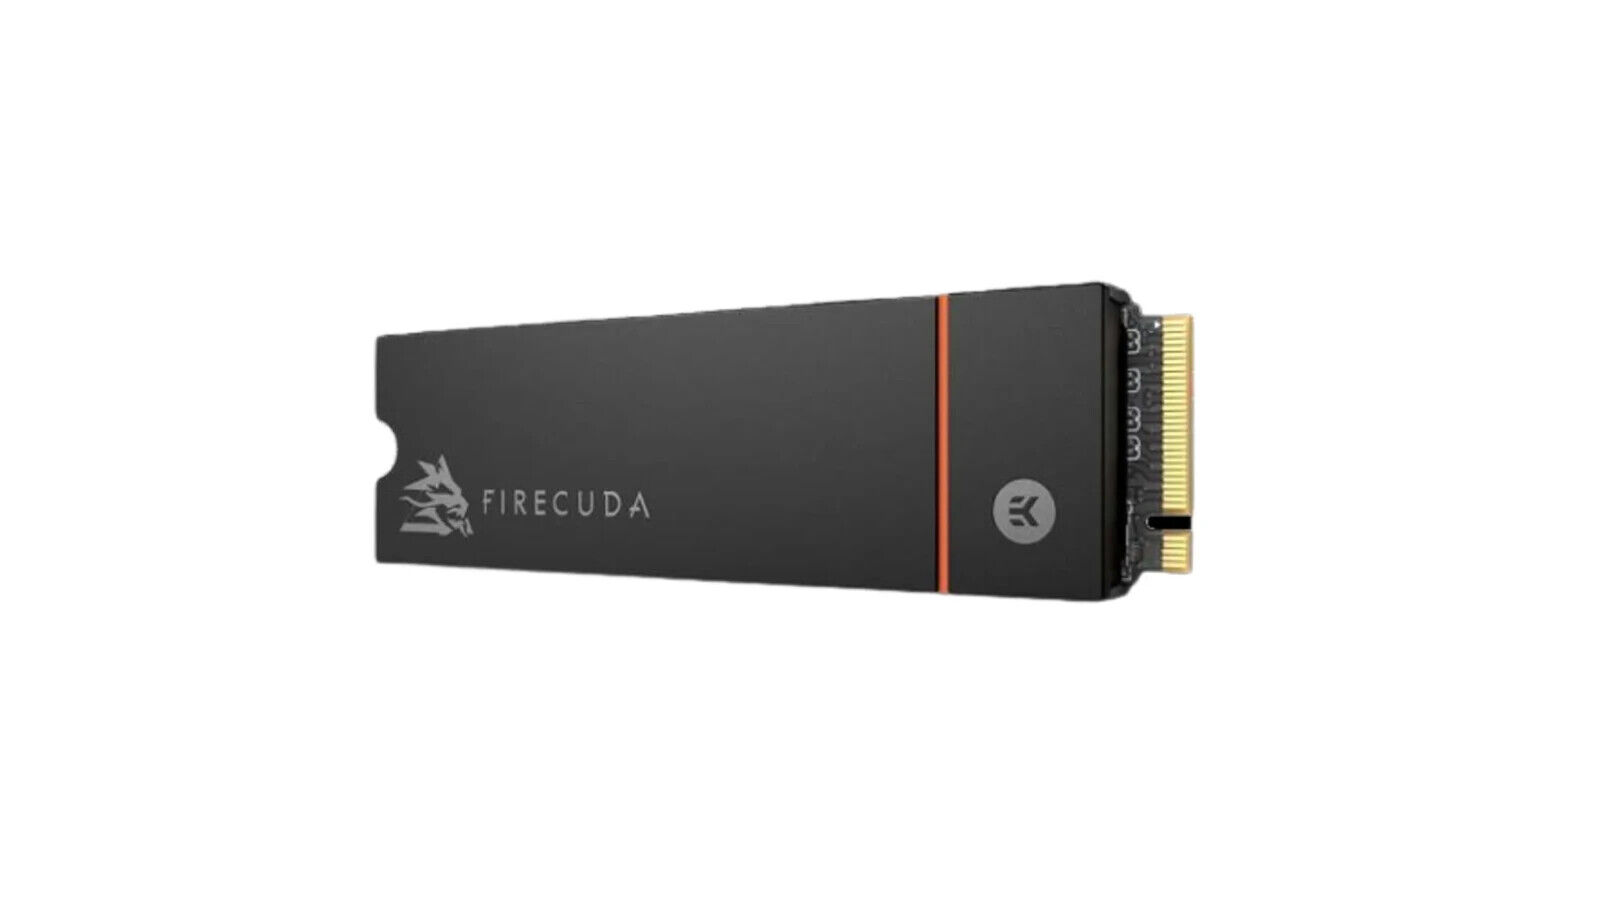 Seagate FireCuda 530 1TB M.2 NVMe Internal SSD with Heatsink  (ZP1000GM3A023) for sale online